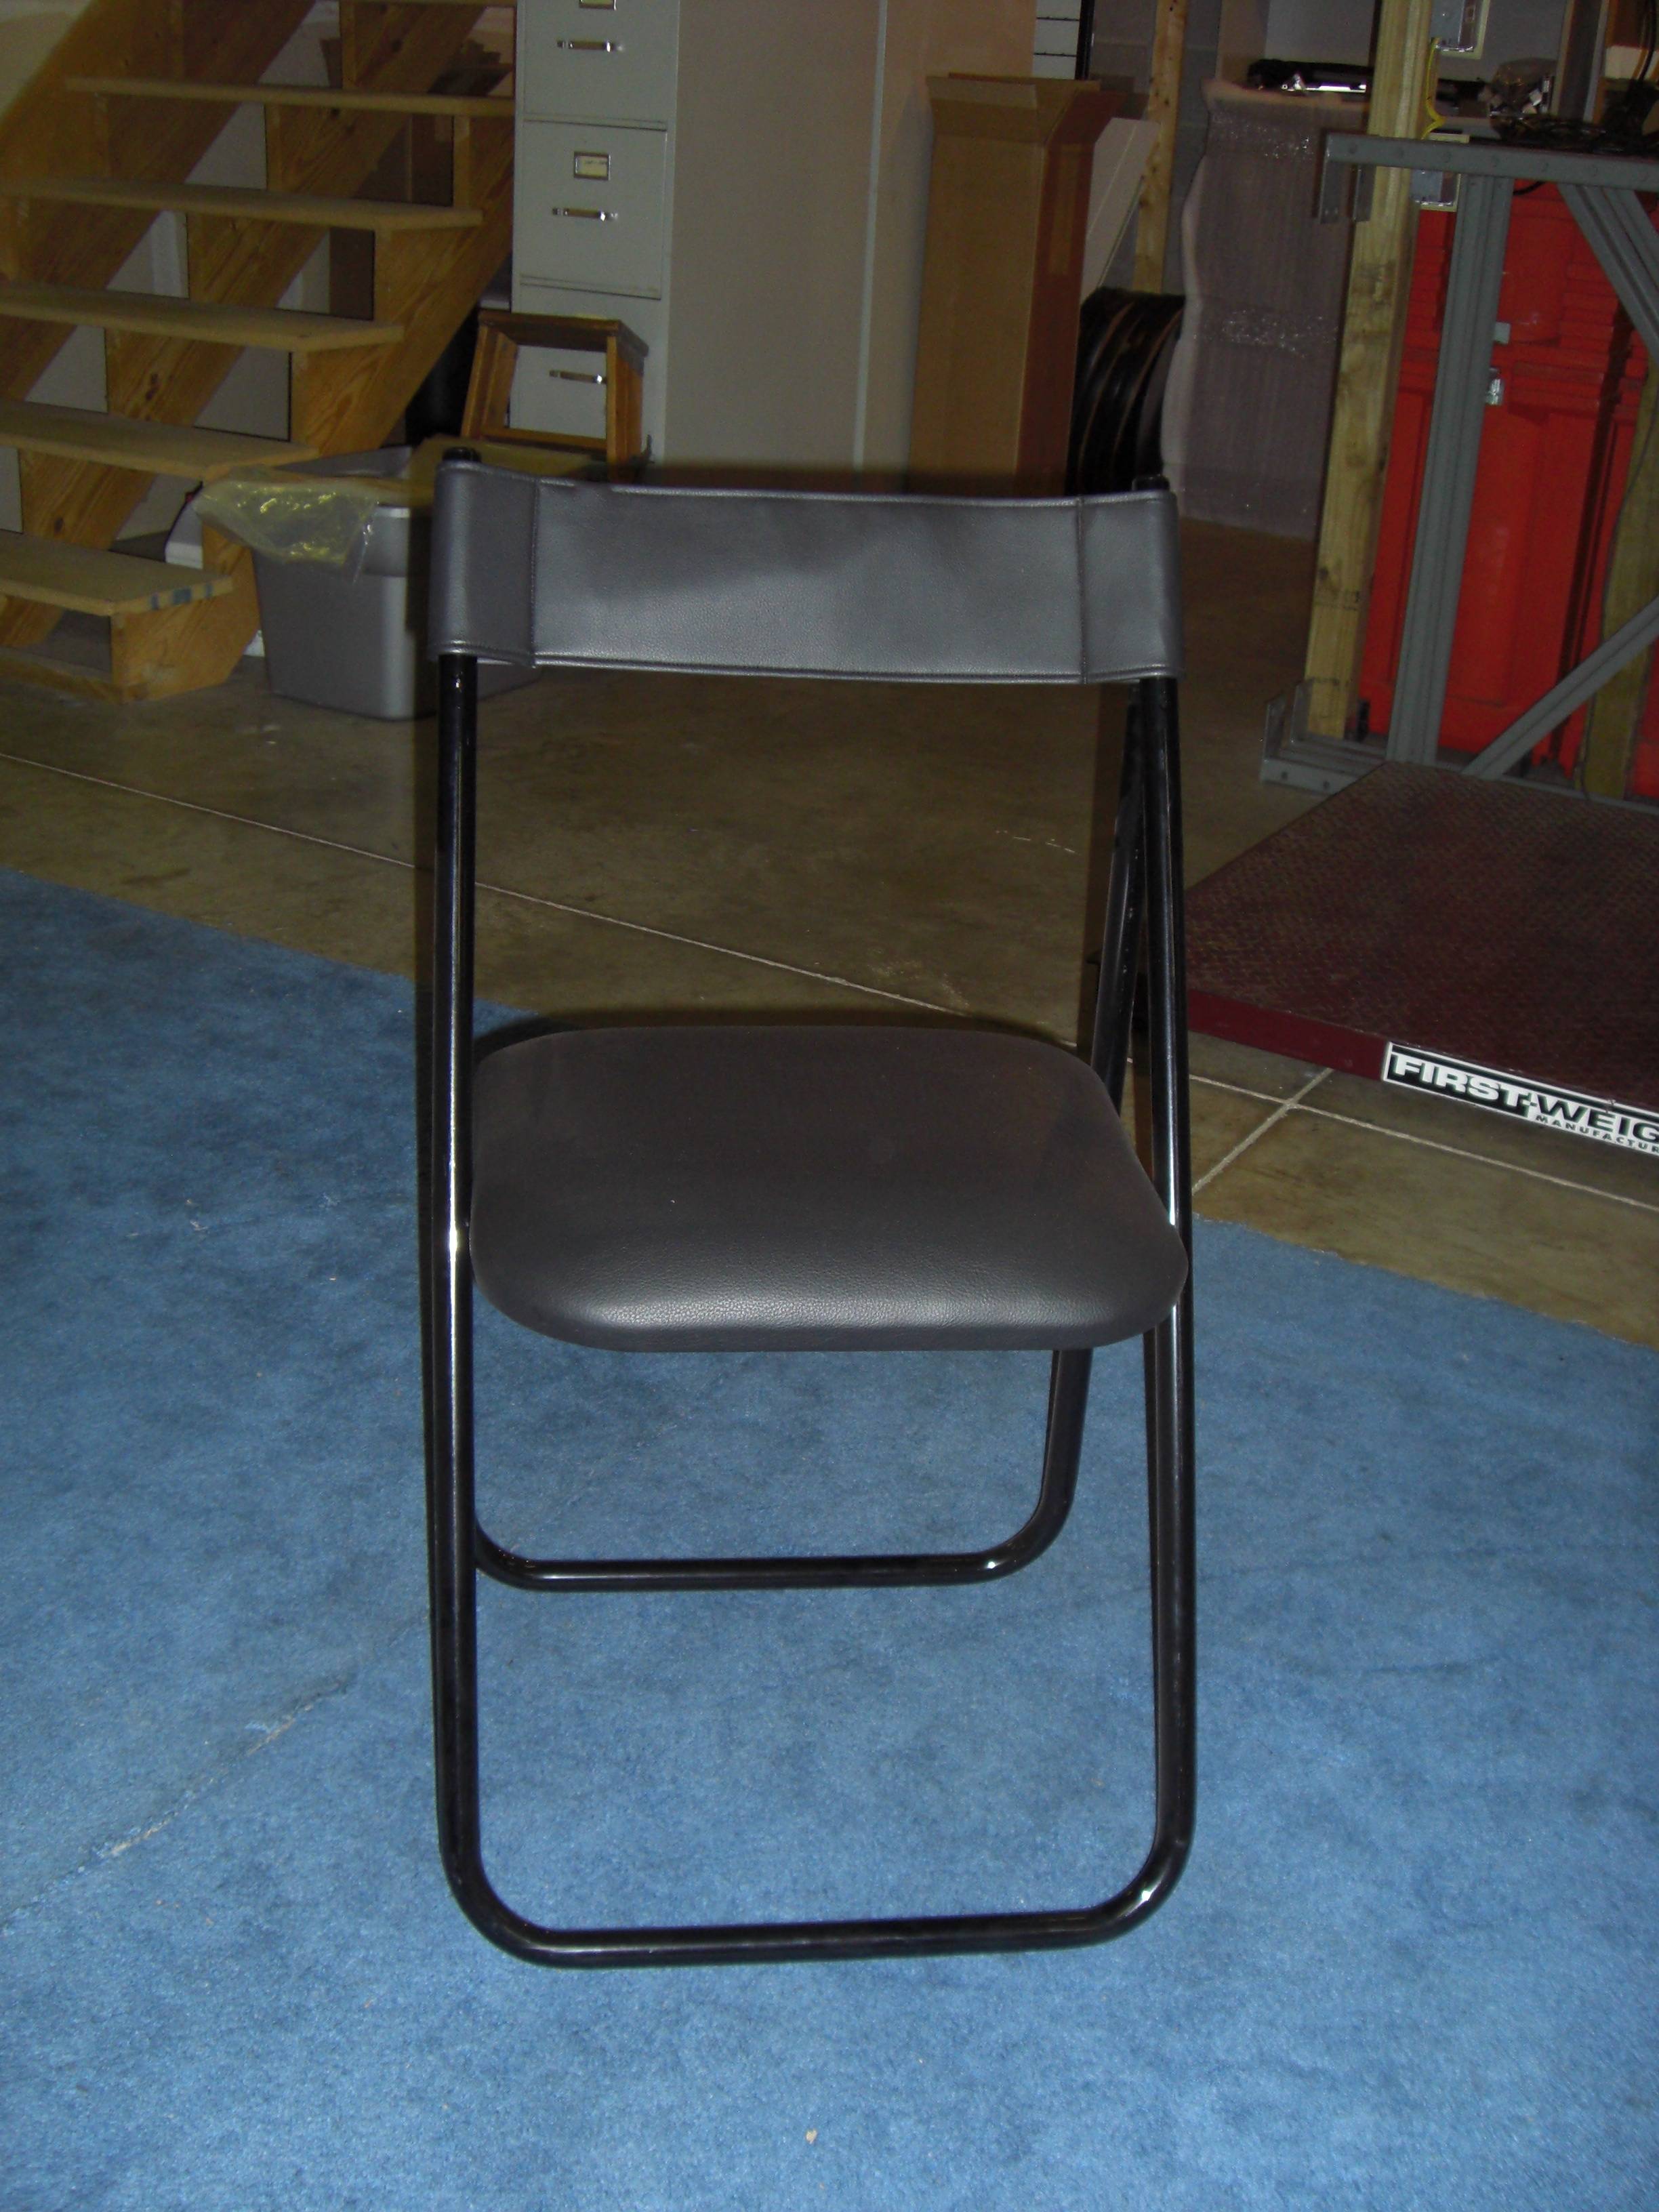 Trussworks folding chair